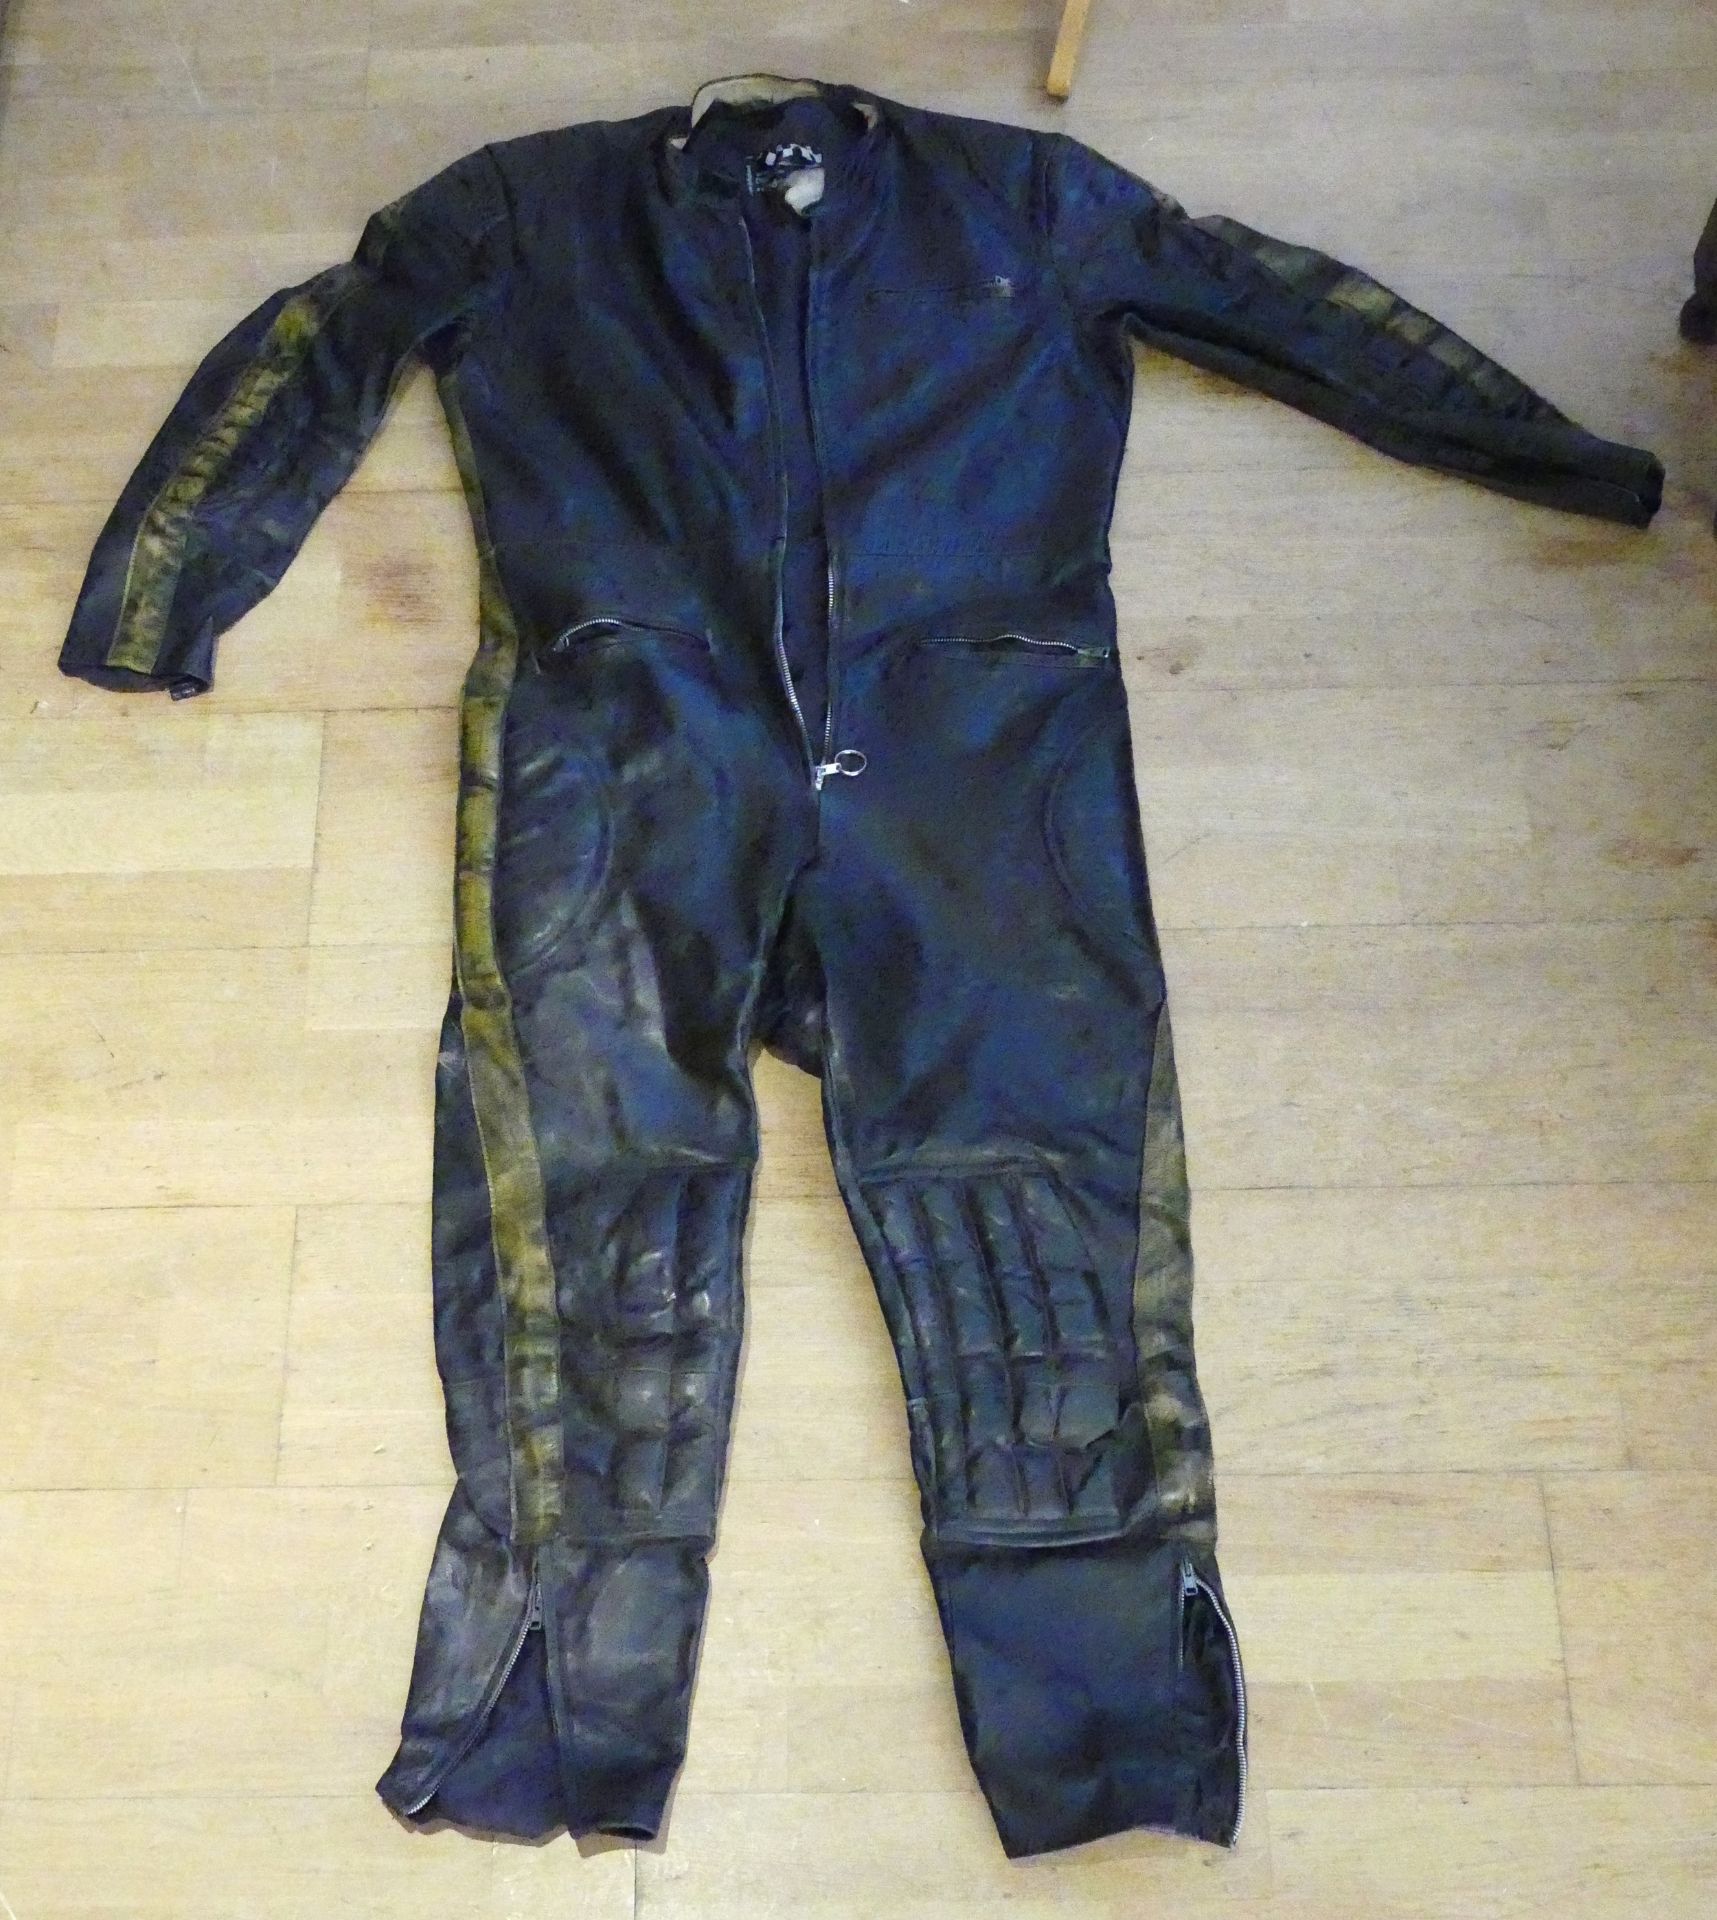 A 'Waddington' black leather set of motorcycle leathers, 143cm long